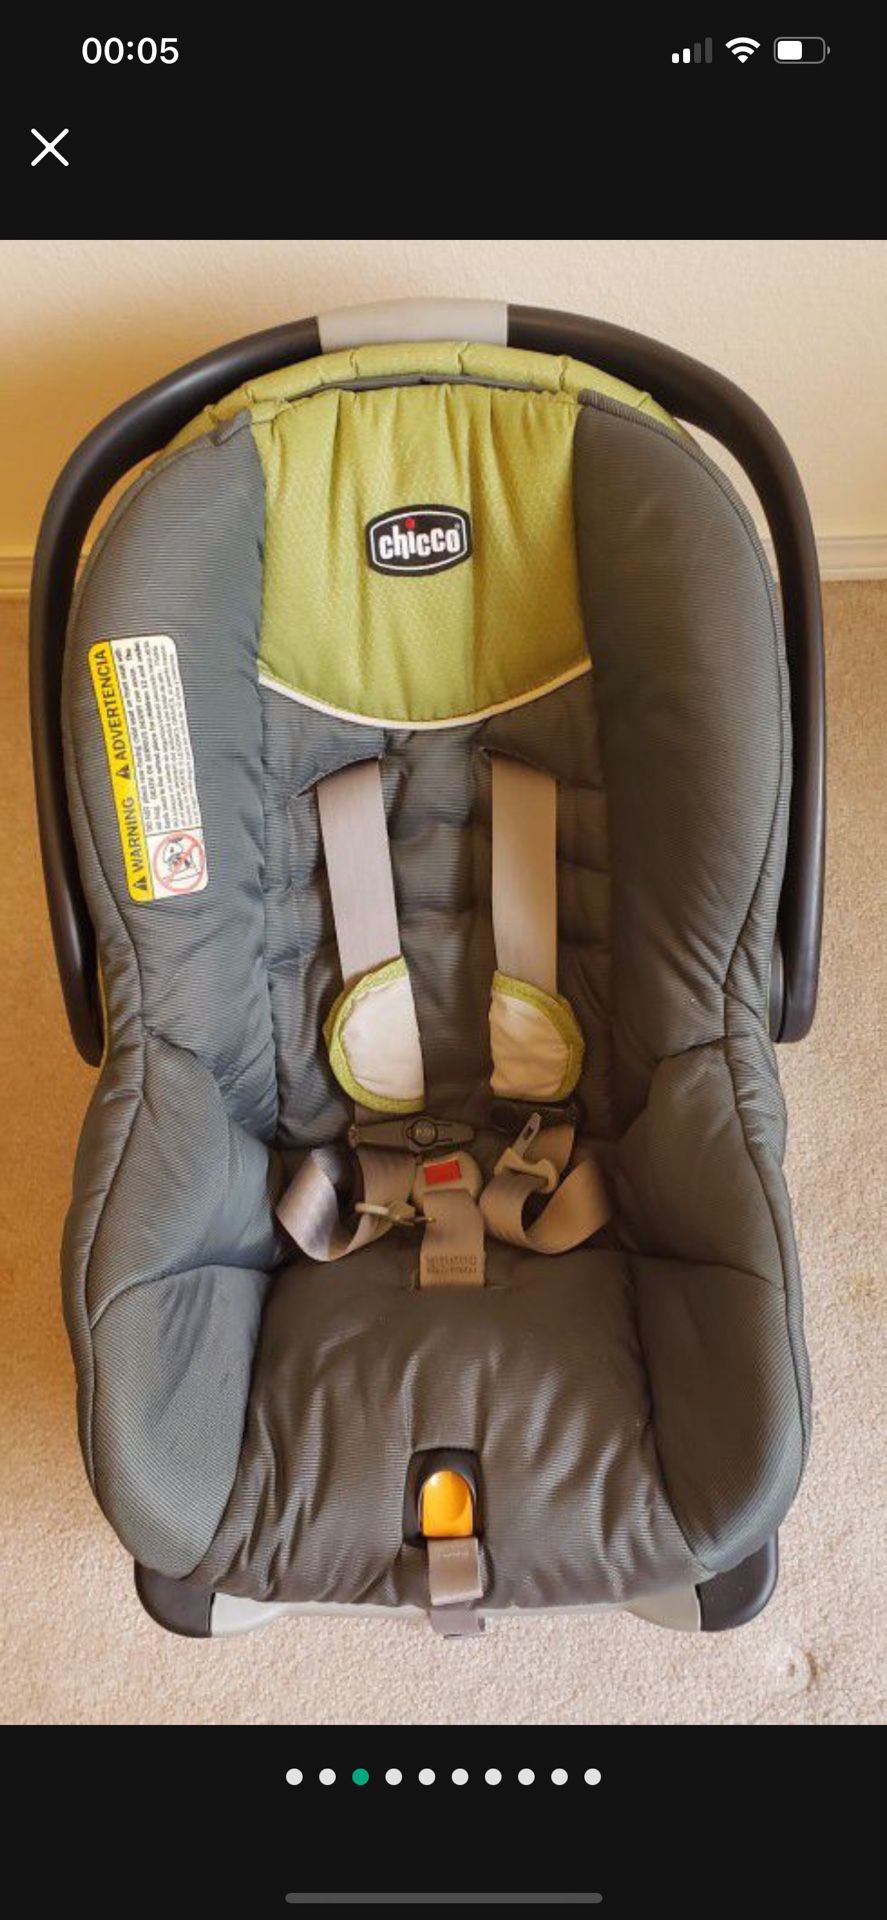 Chicco Baby Car Seat w/ Detachable Base